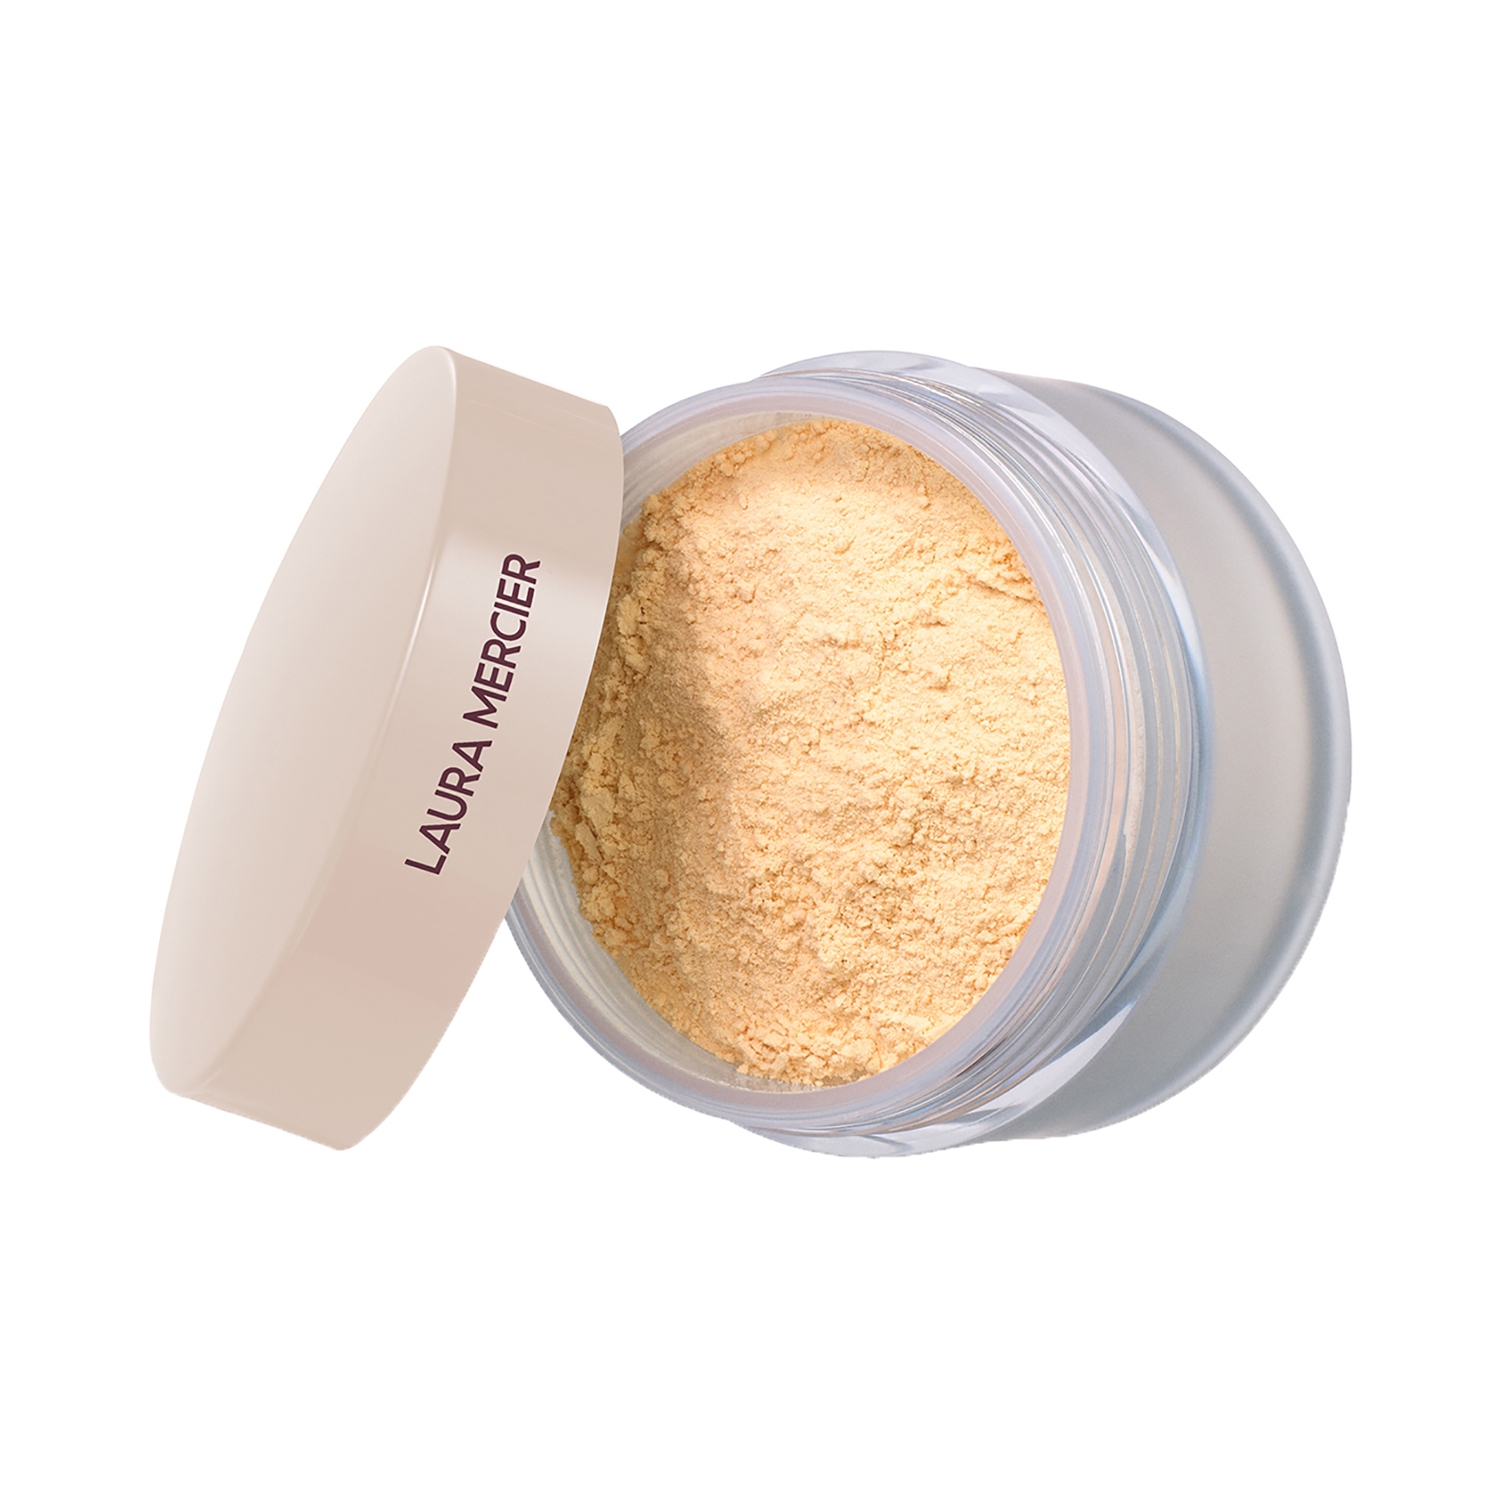 Laura Mercier | Laura Mercier Translucent Loose Setting Powder Ultra Blur - Translucent Honey (20g)